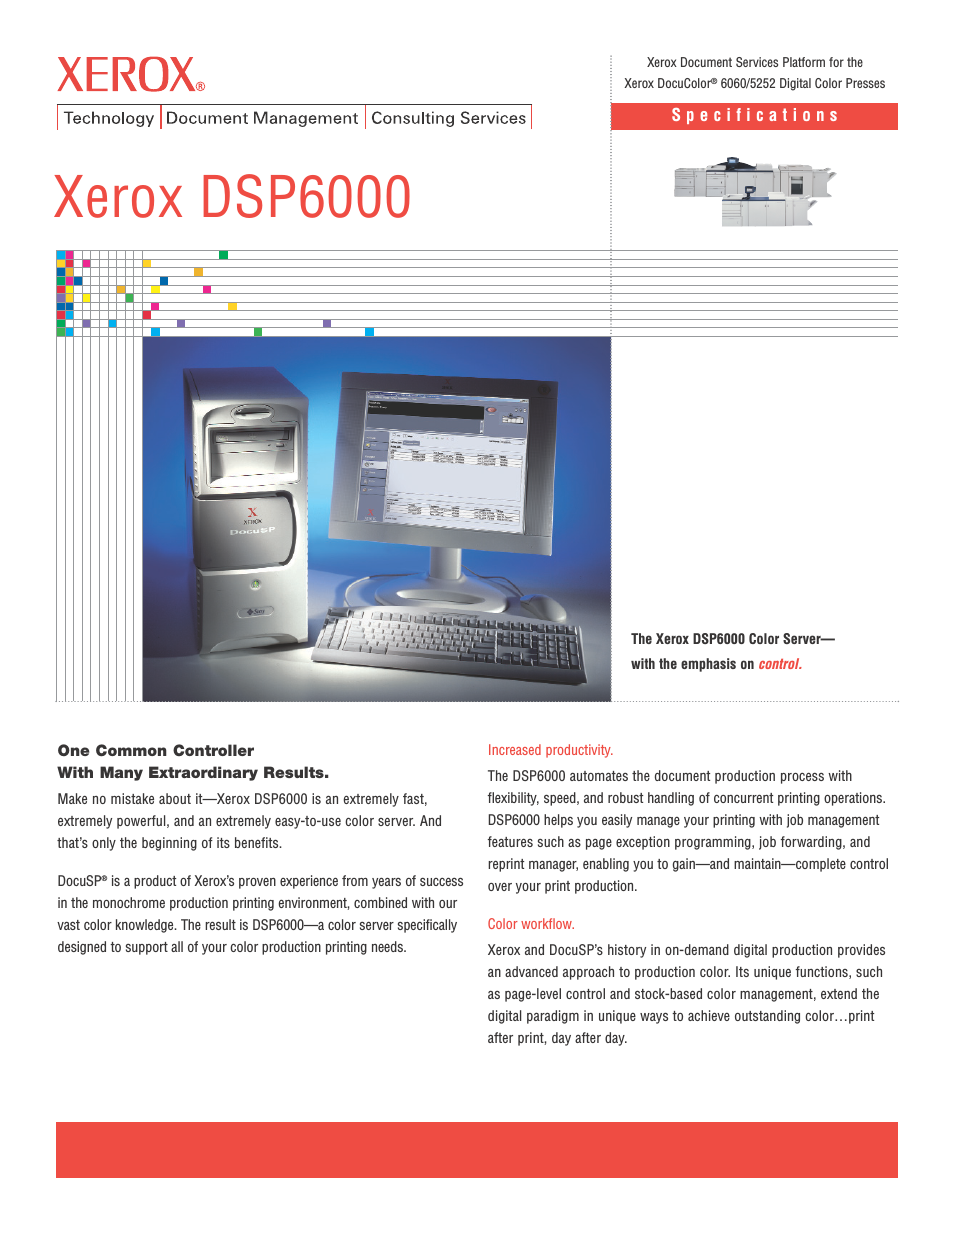 DSP6000